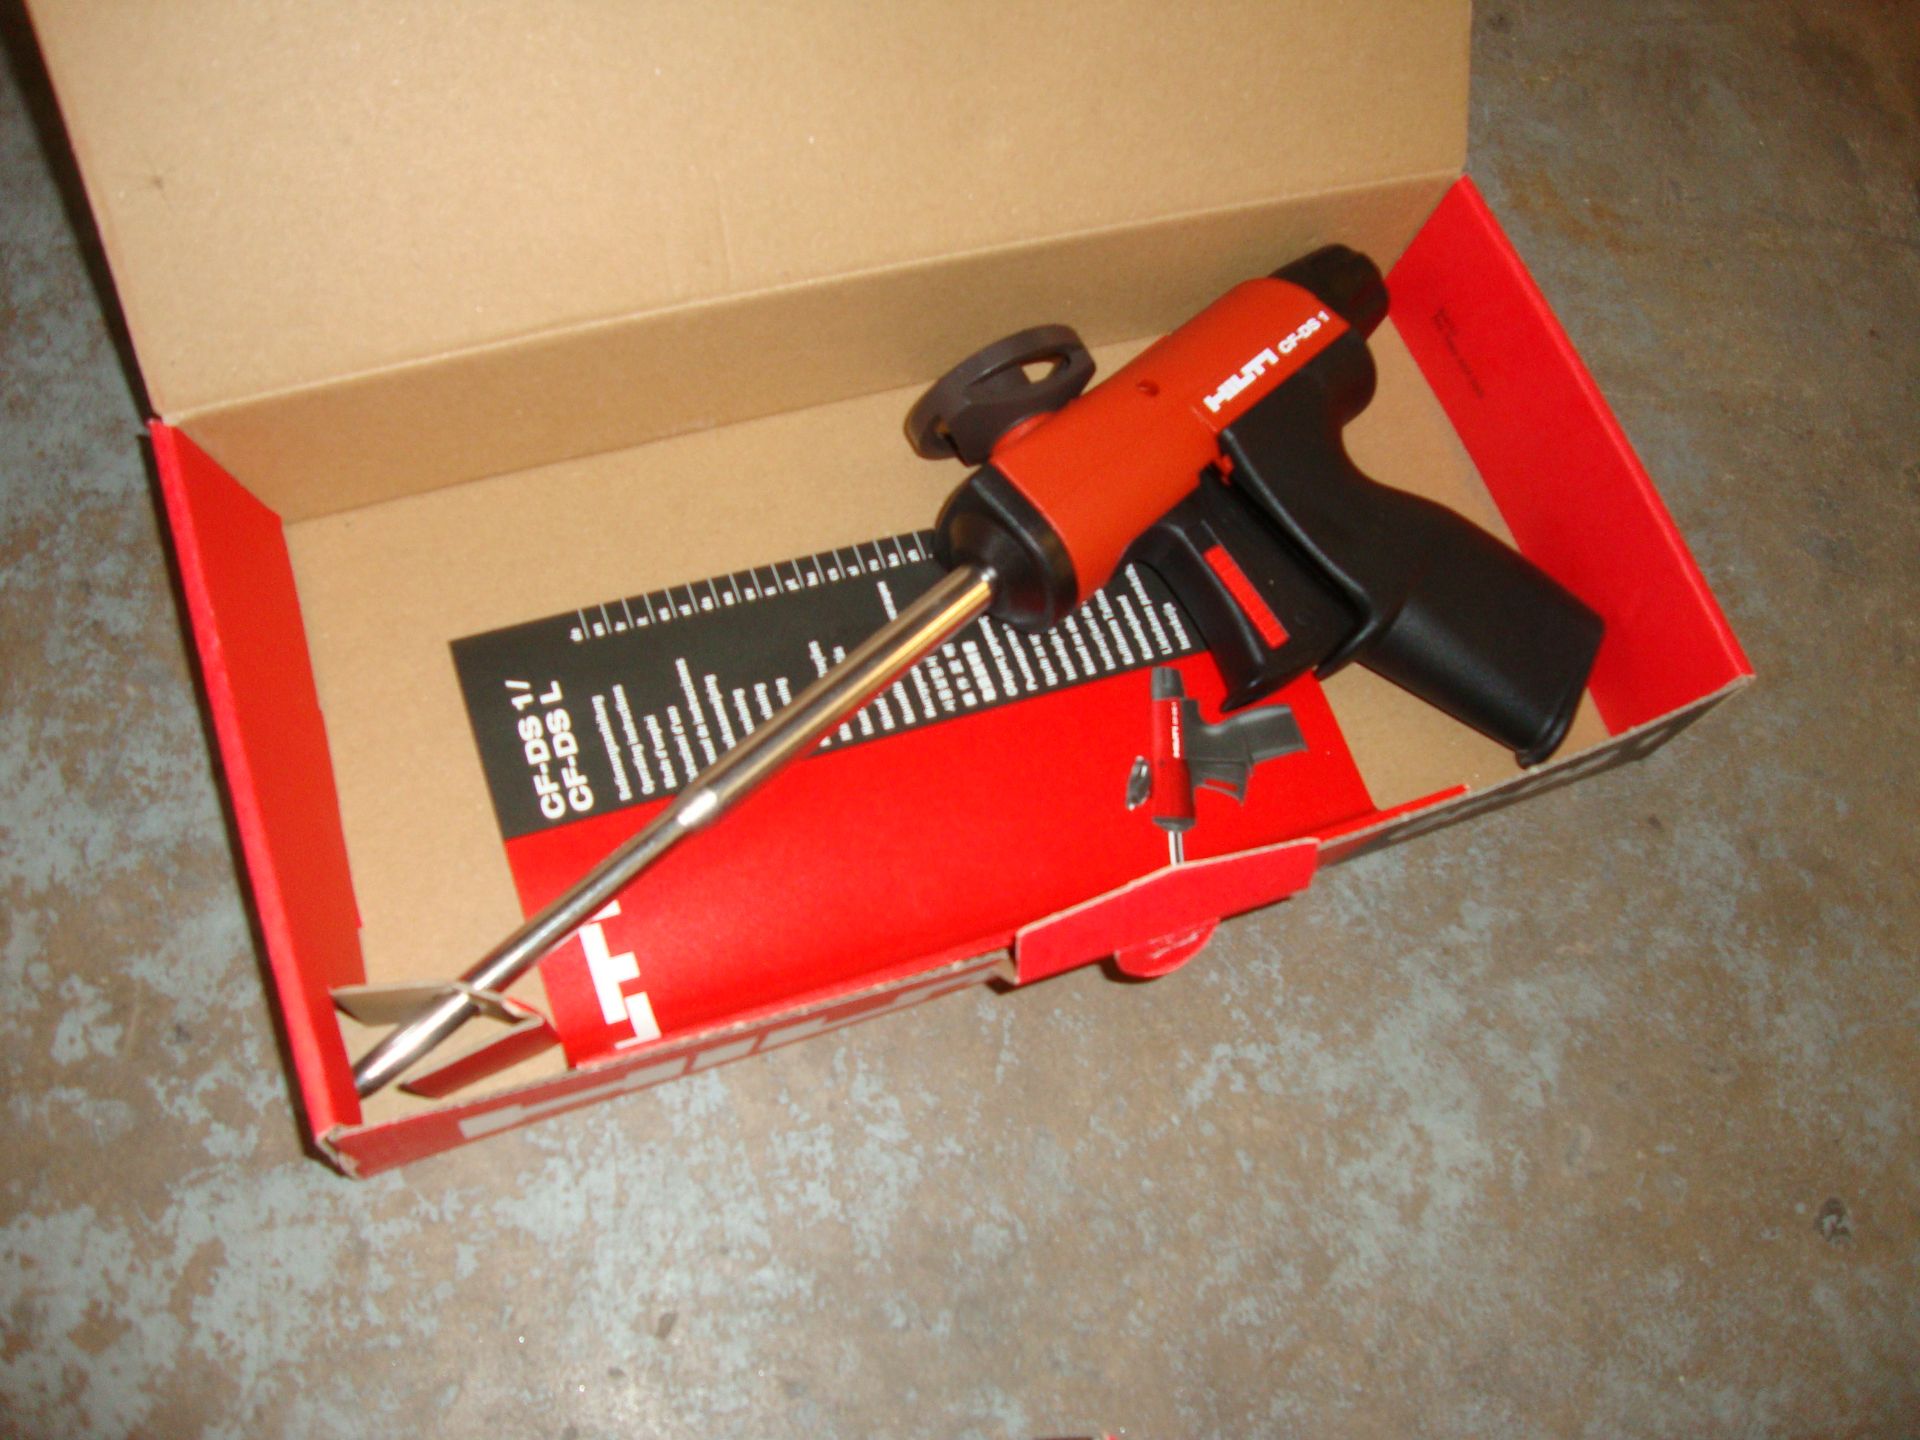 Hilti model CF-DS1 dispenser gun - appears unused. Includes box and instruction booklet/manual - Bild 2 aus 2